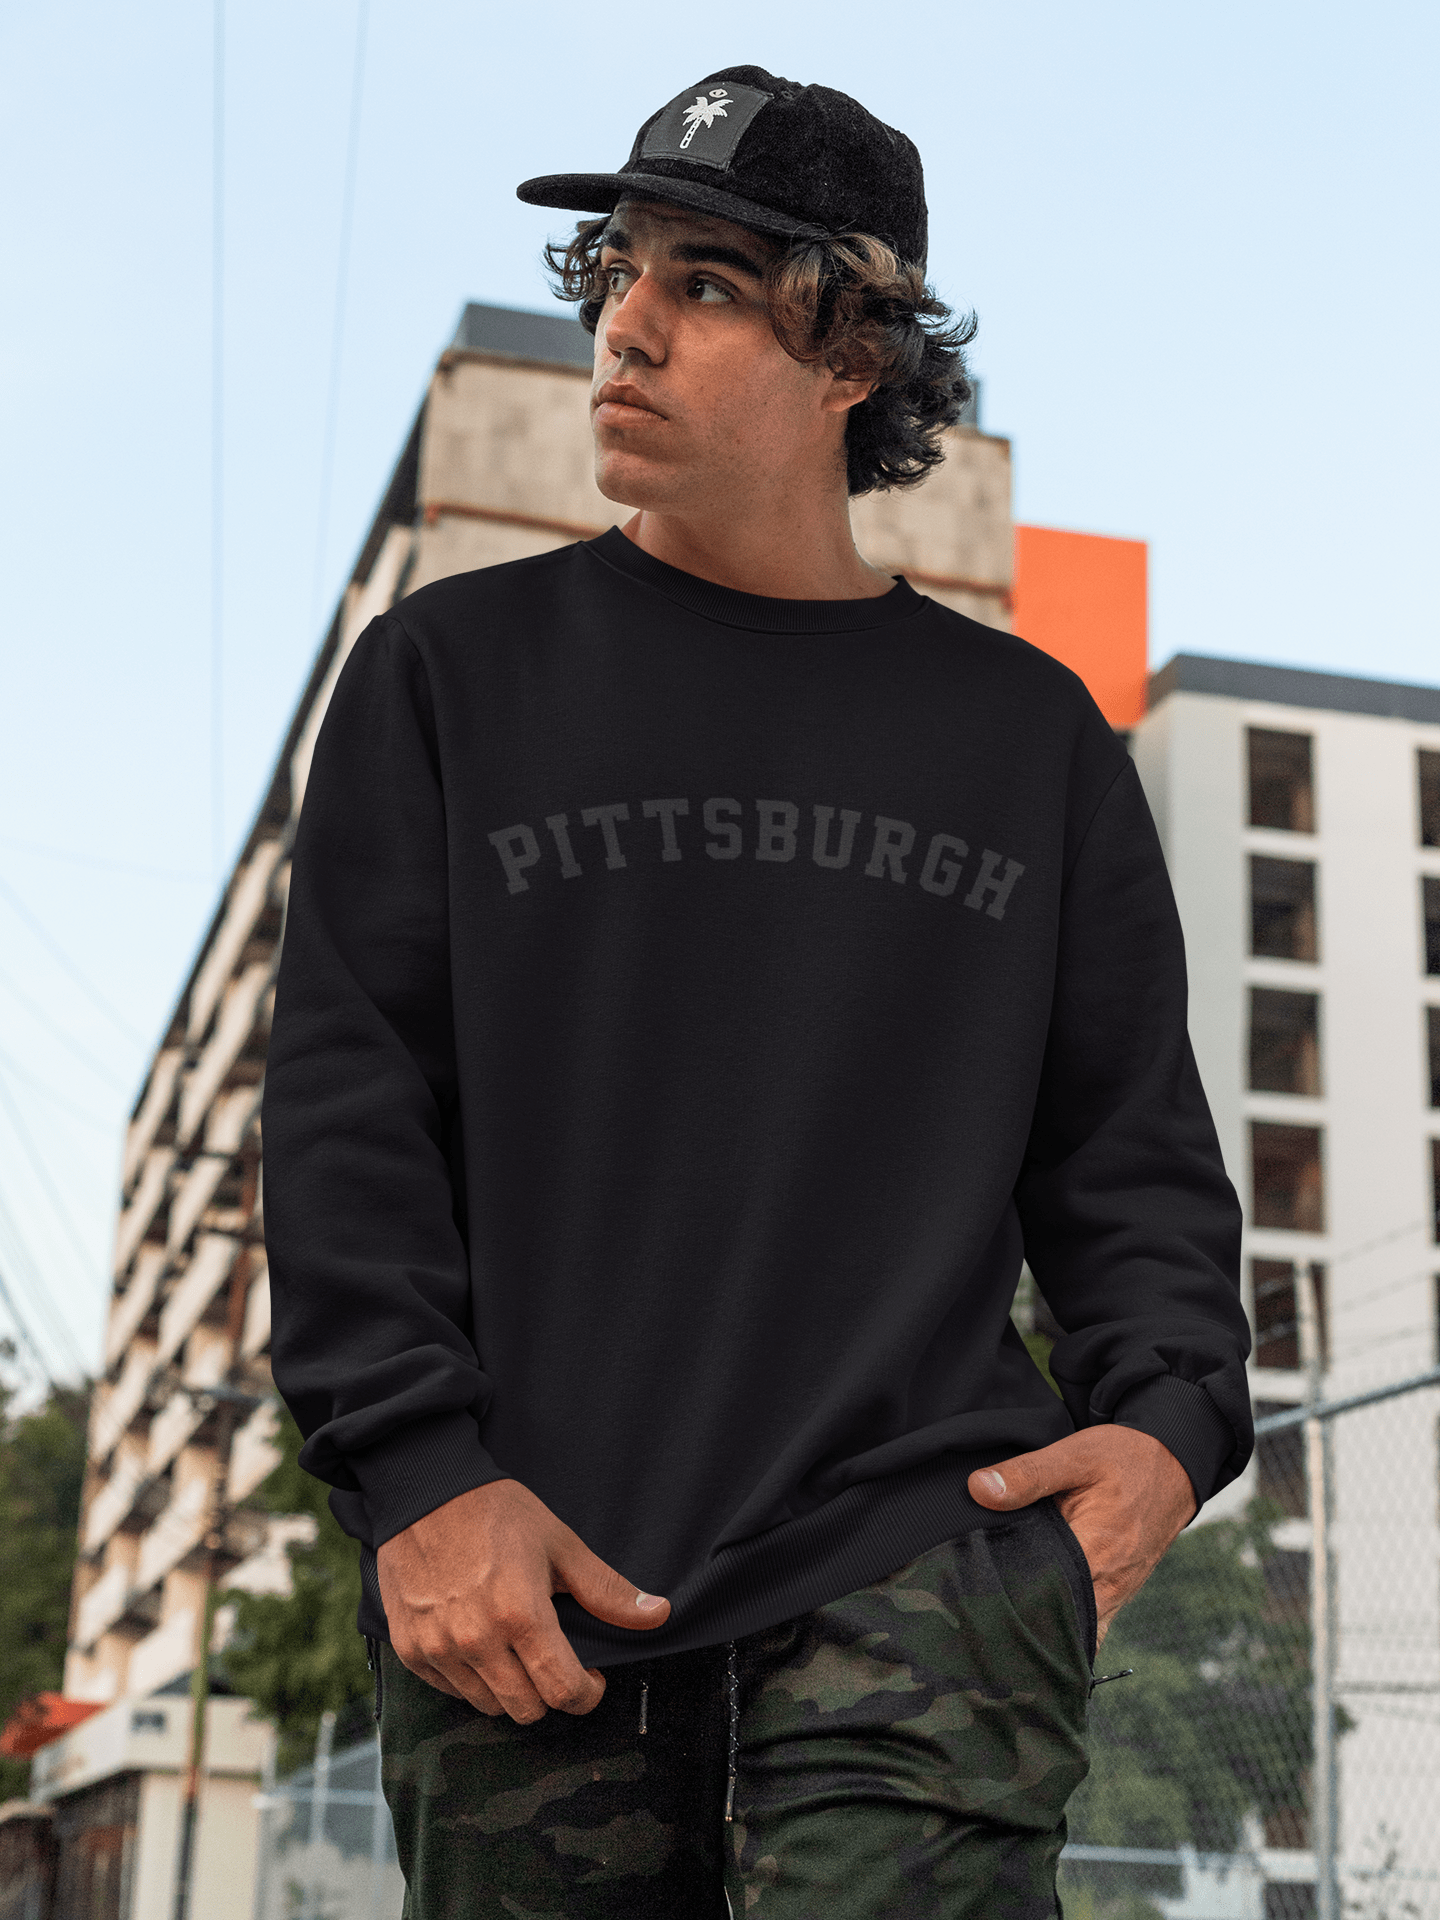 City Shirt Co Pittsburgh Text